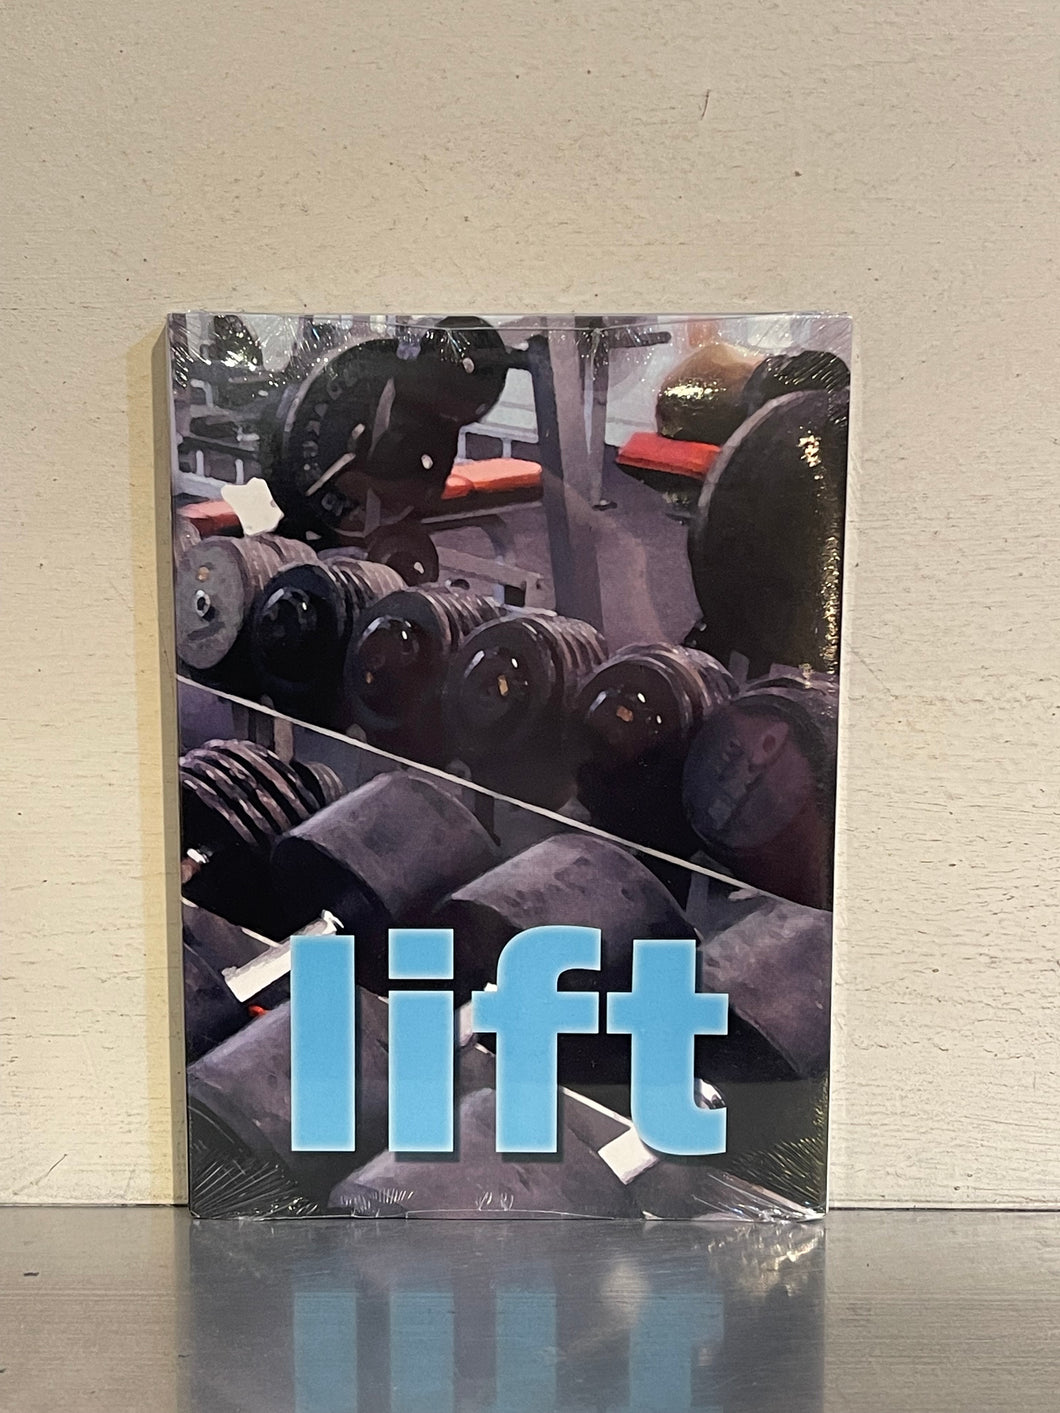 Lift: A video by David Robbins